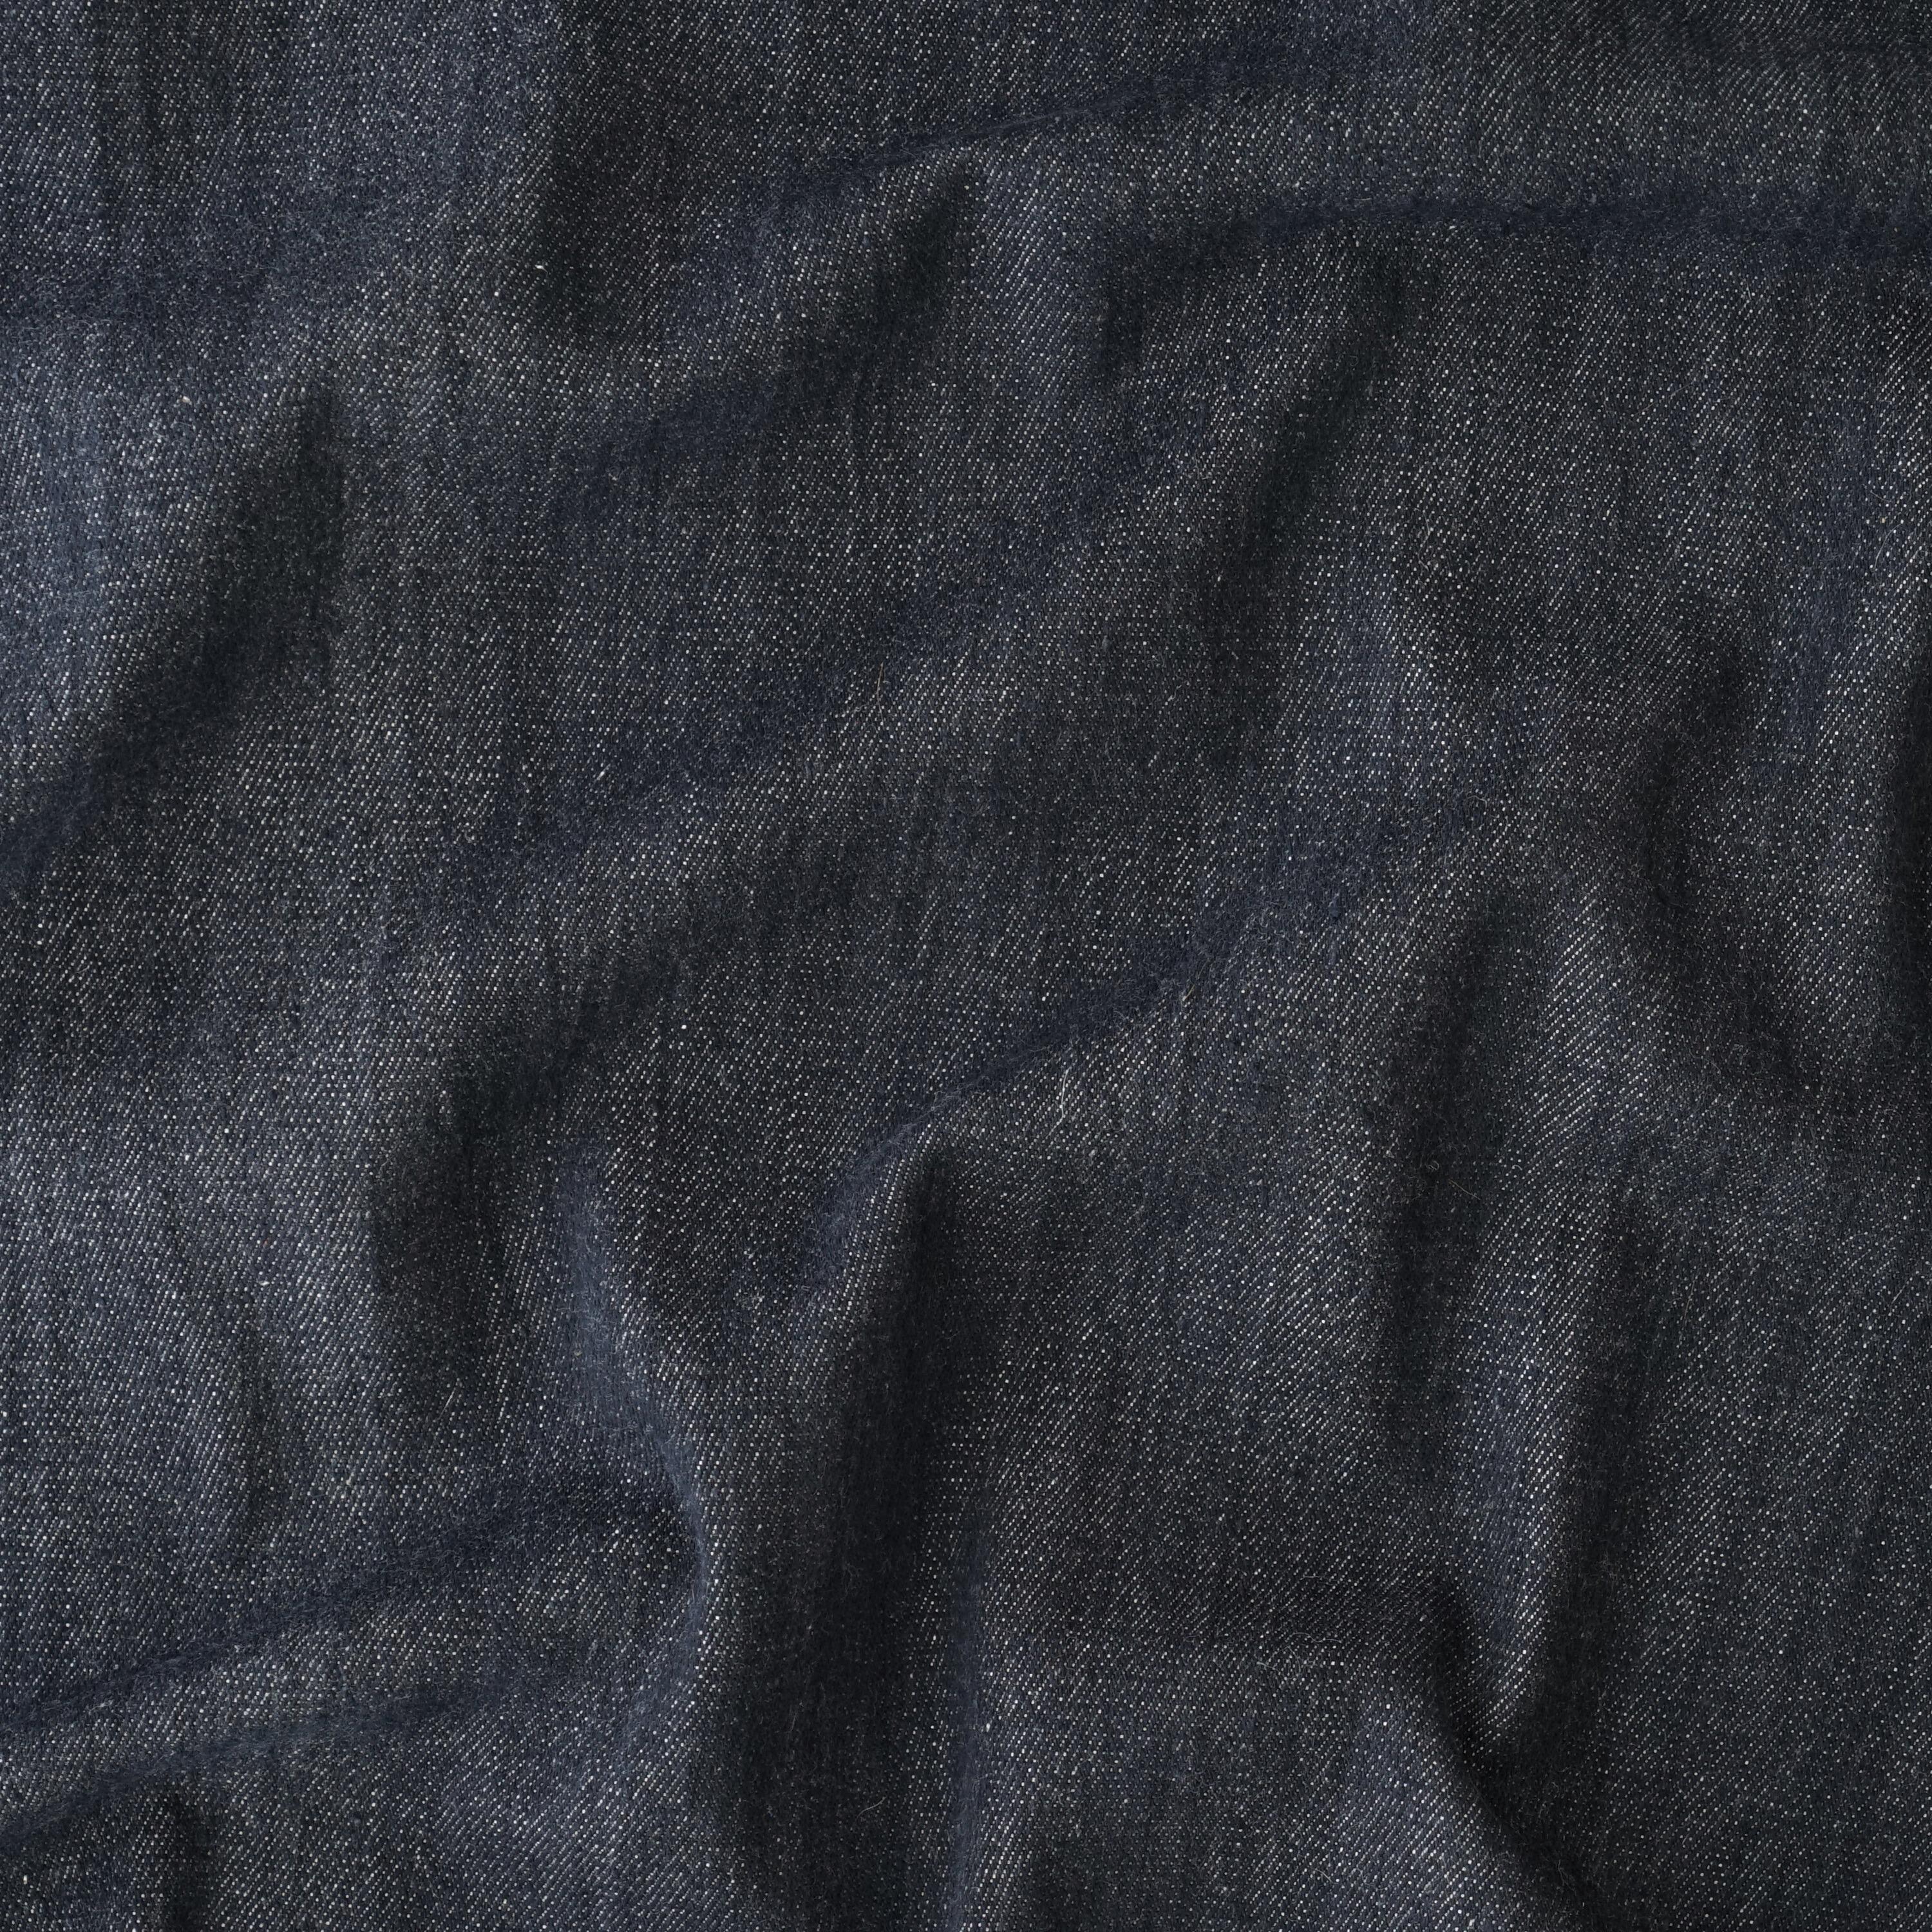 KJC07 - Black Handloom Woven Denim - Organic Cotton - Contrast